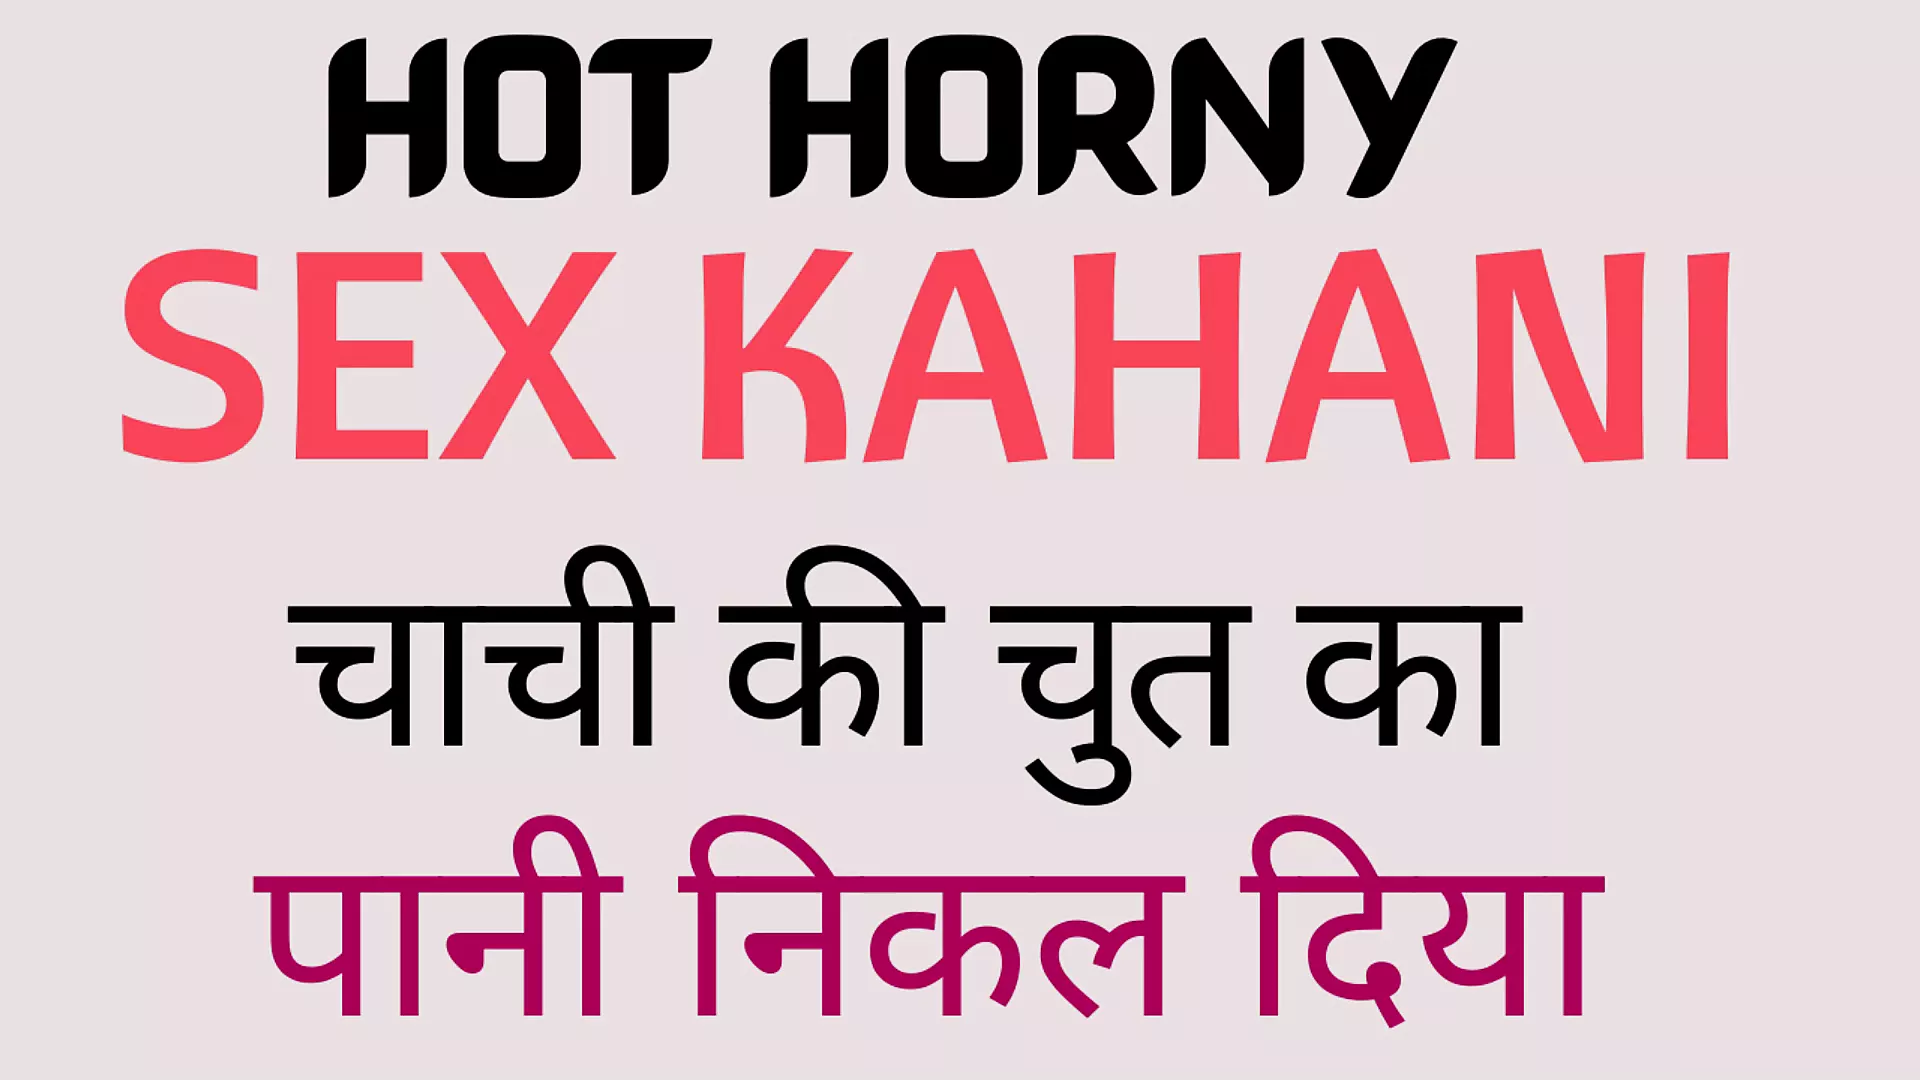 Hot Horny Sex Kahani Sex Story Chachi Ki Chut ka pani - порно видео